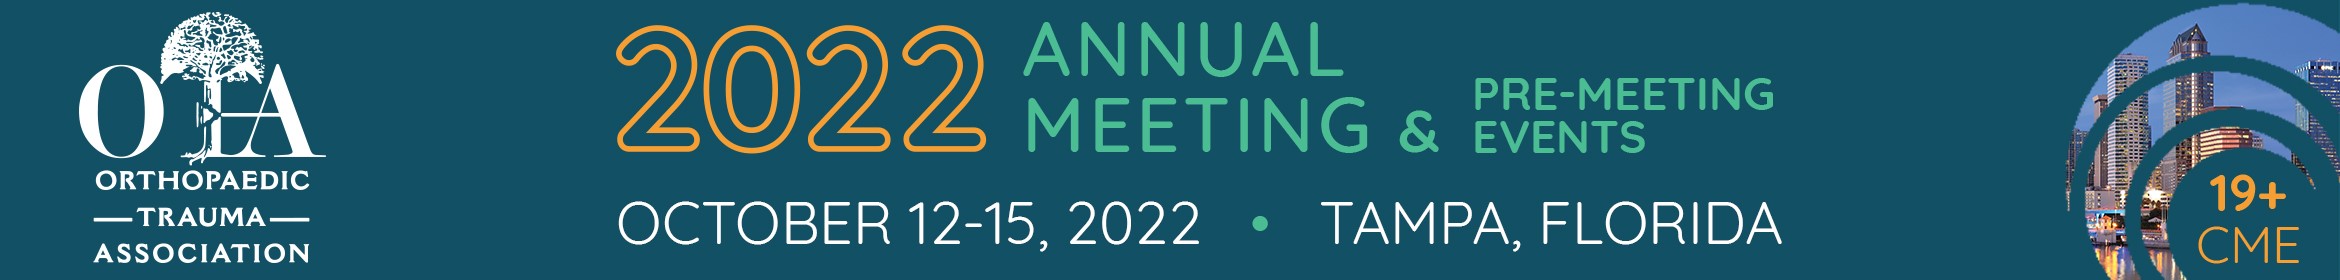 OTA Annual Meeting Main banner